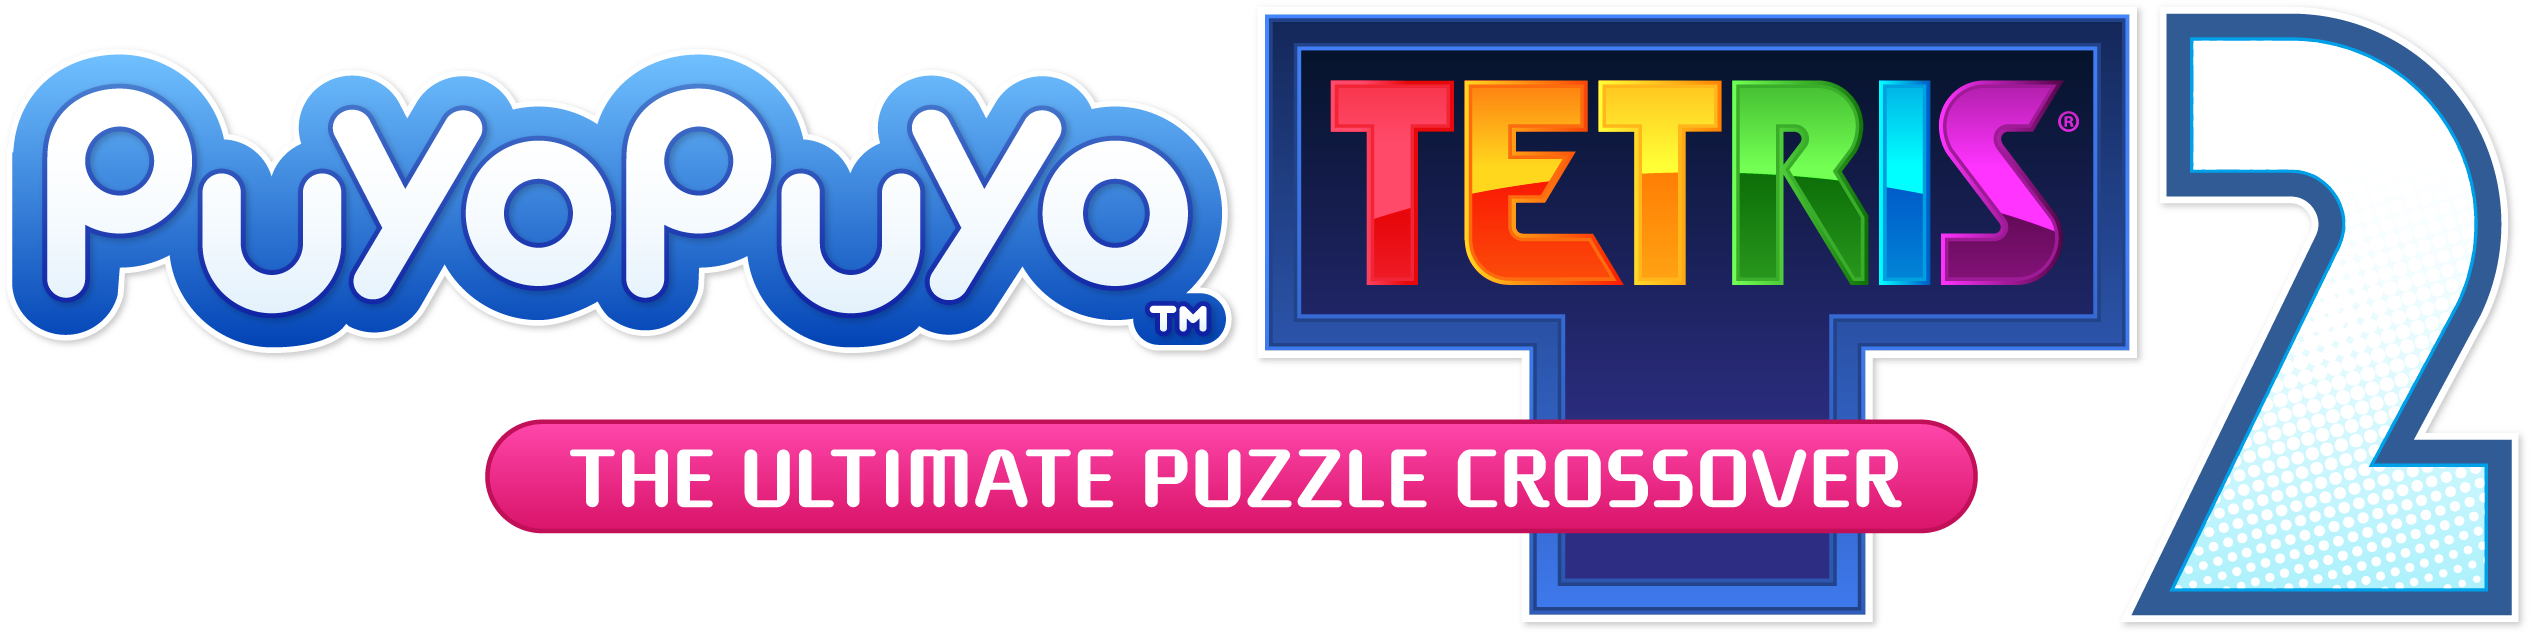 Tetris Logo PNG HD Quality